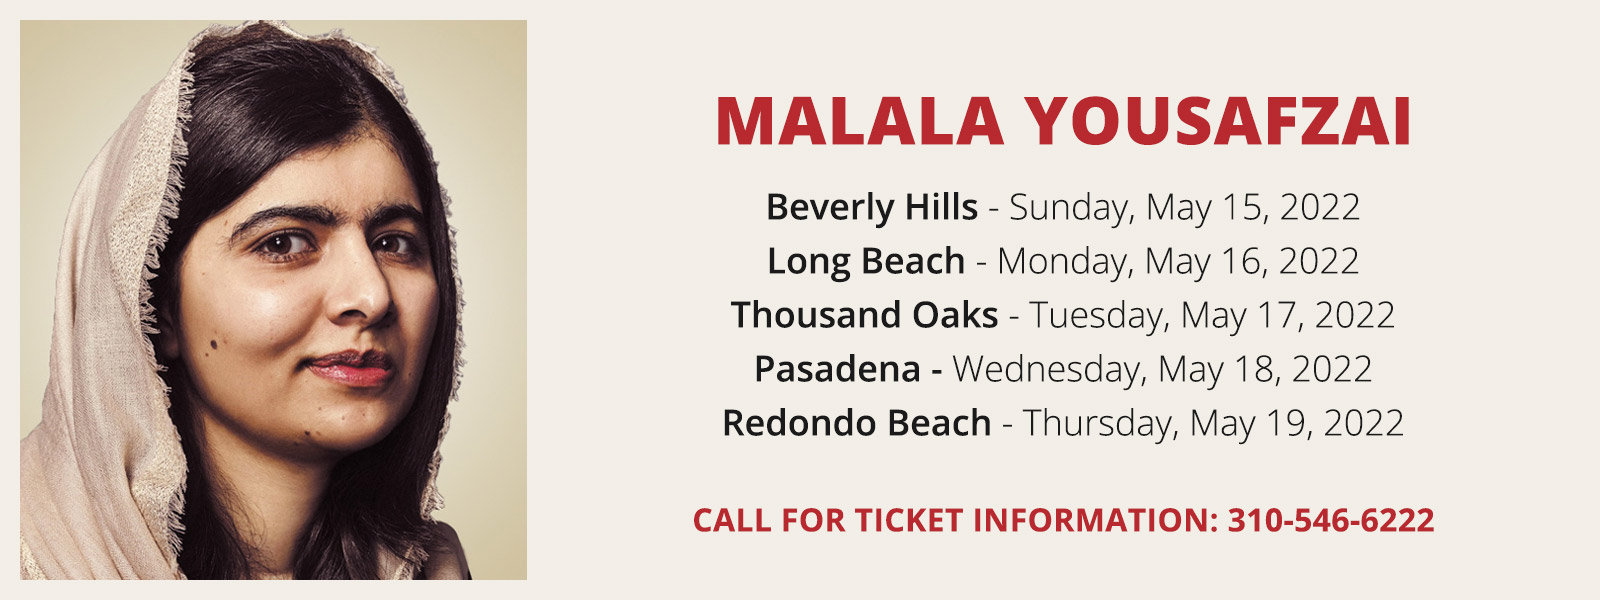 Malala Yousafzai - Beverly Hills Sunday, May 15, 2022; Long Beach Monday, May 16, 2022; Thousand Oaks Tuesday, May 17, 2022; Pasadena Wednesday, May 18, 2022; Redondo Beach Thursday, May 19, 2022; Call for ticket information 310-546-6222